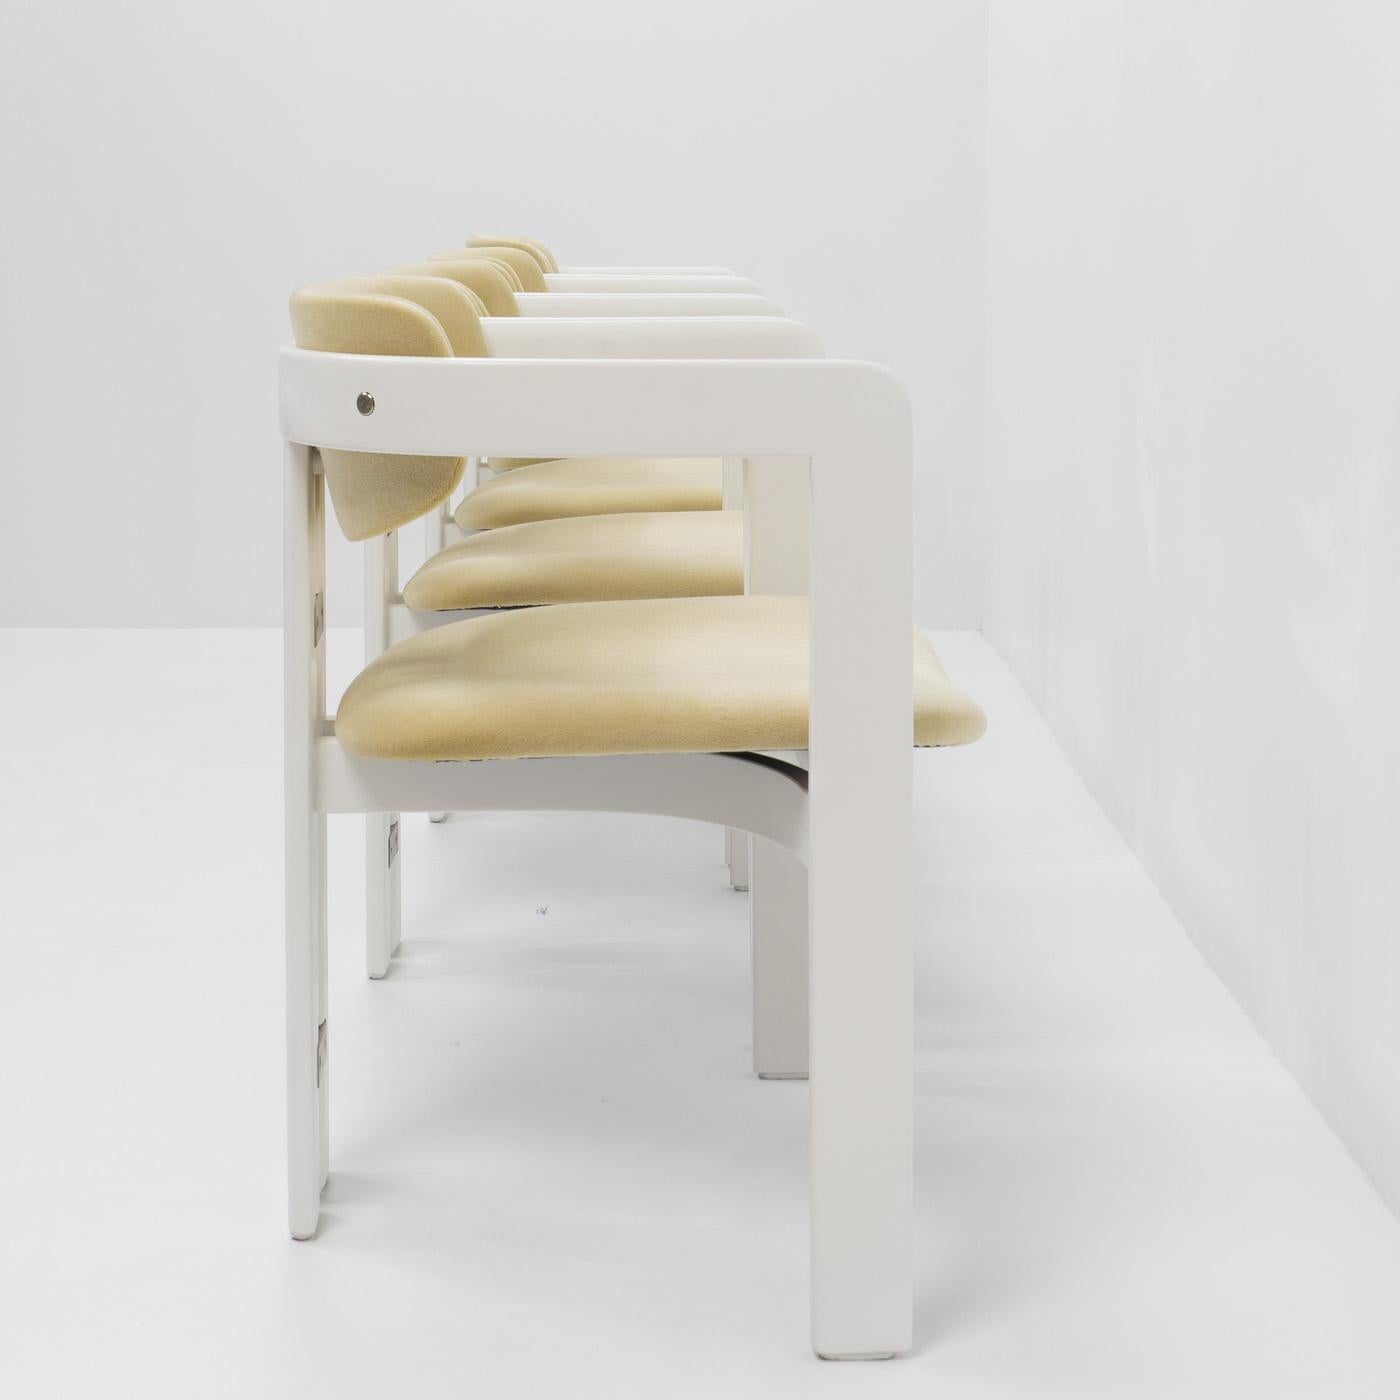 Italian Design Pamplona Chairs by Augusto Savini, 1970s For Sale 5